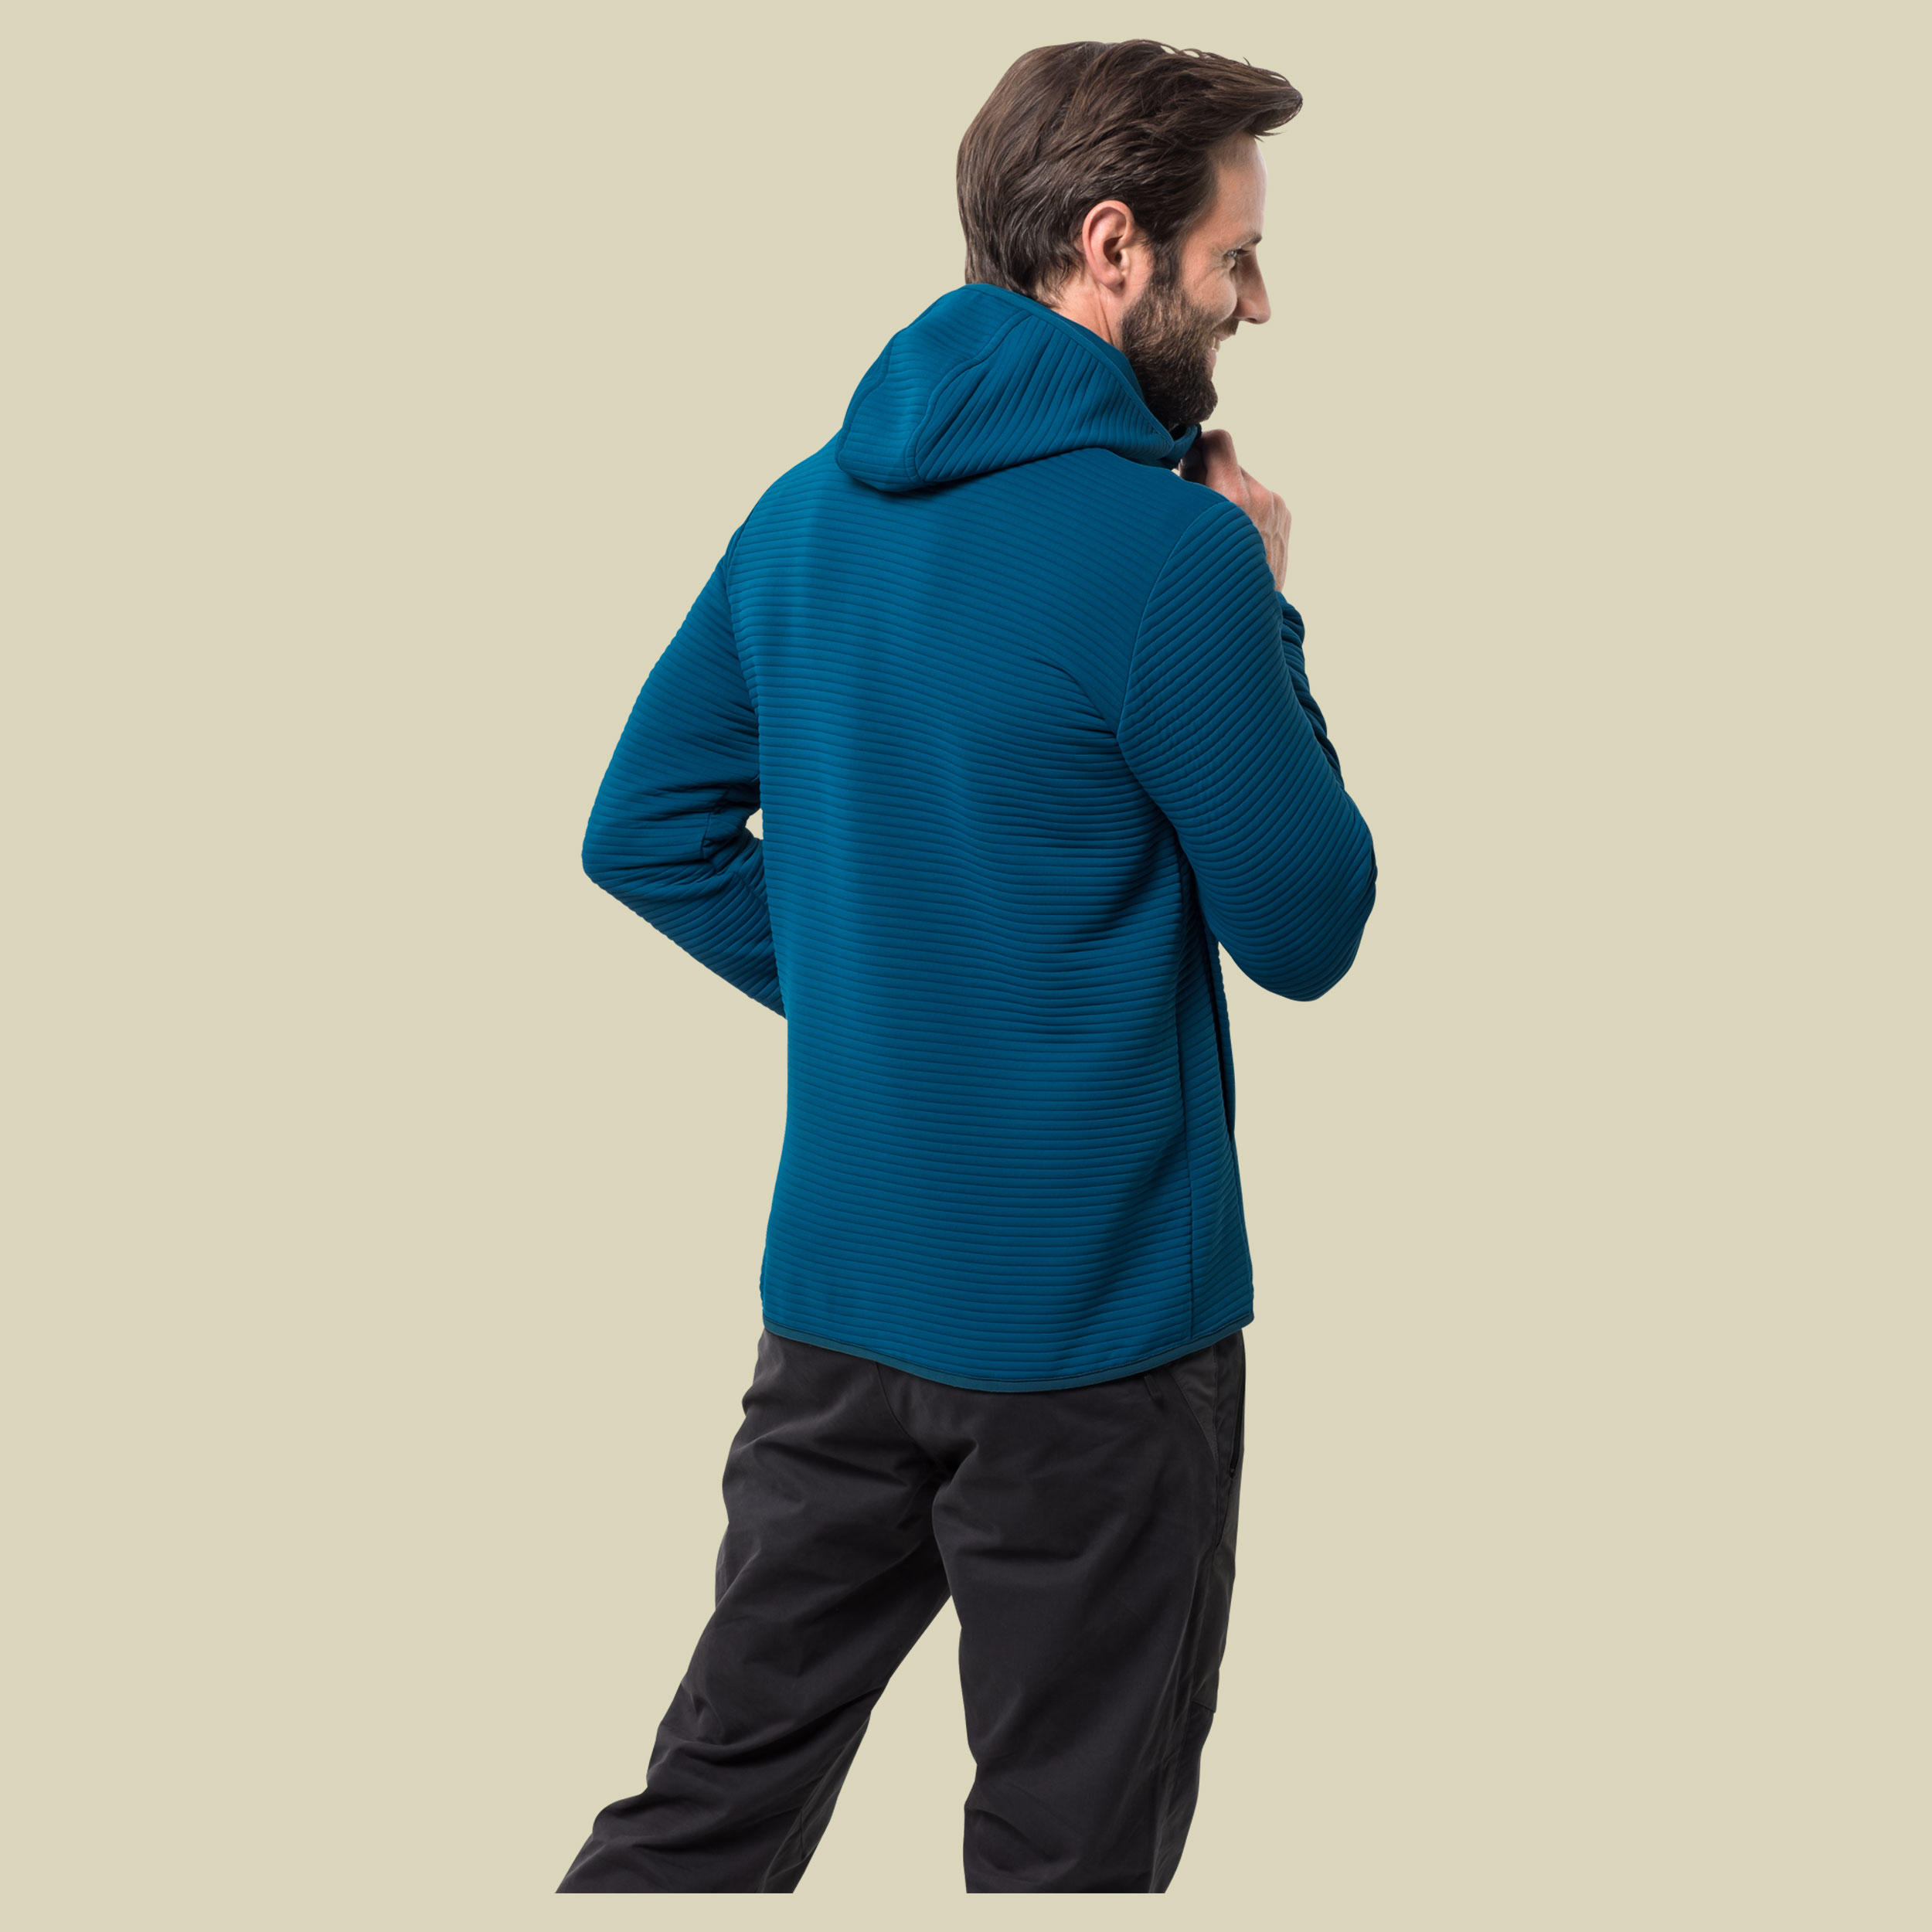 Modesto Hooded Jacket Men Größe L Farbe glacier blue